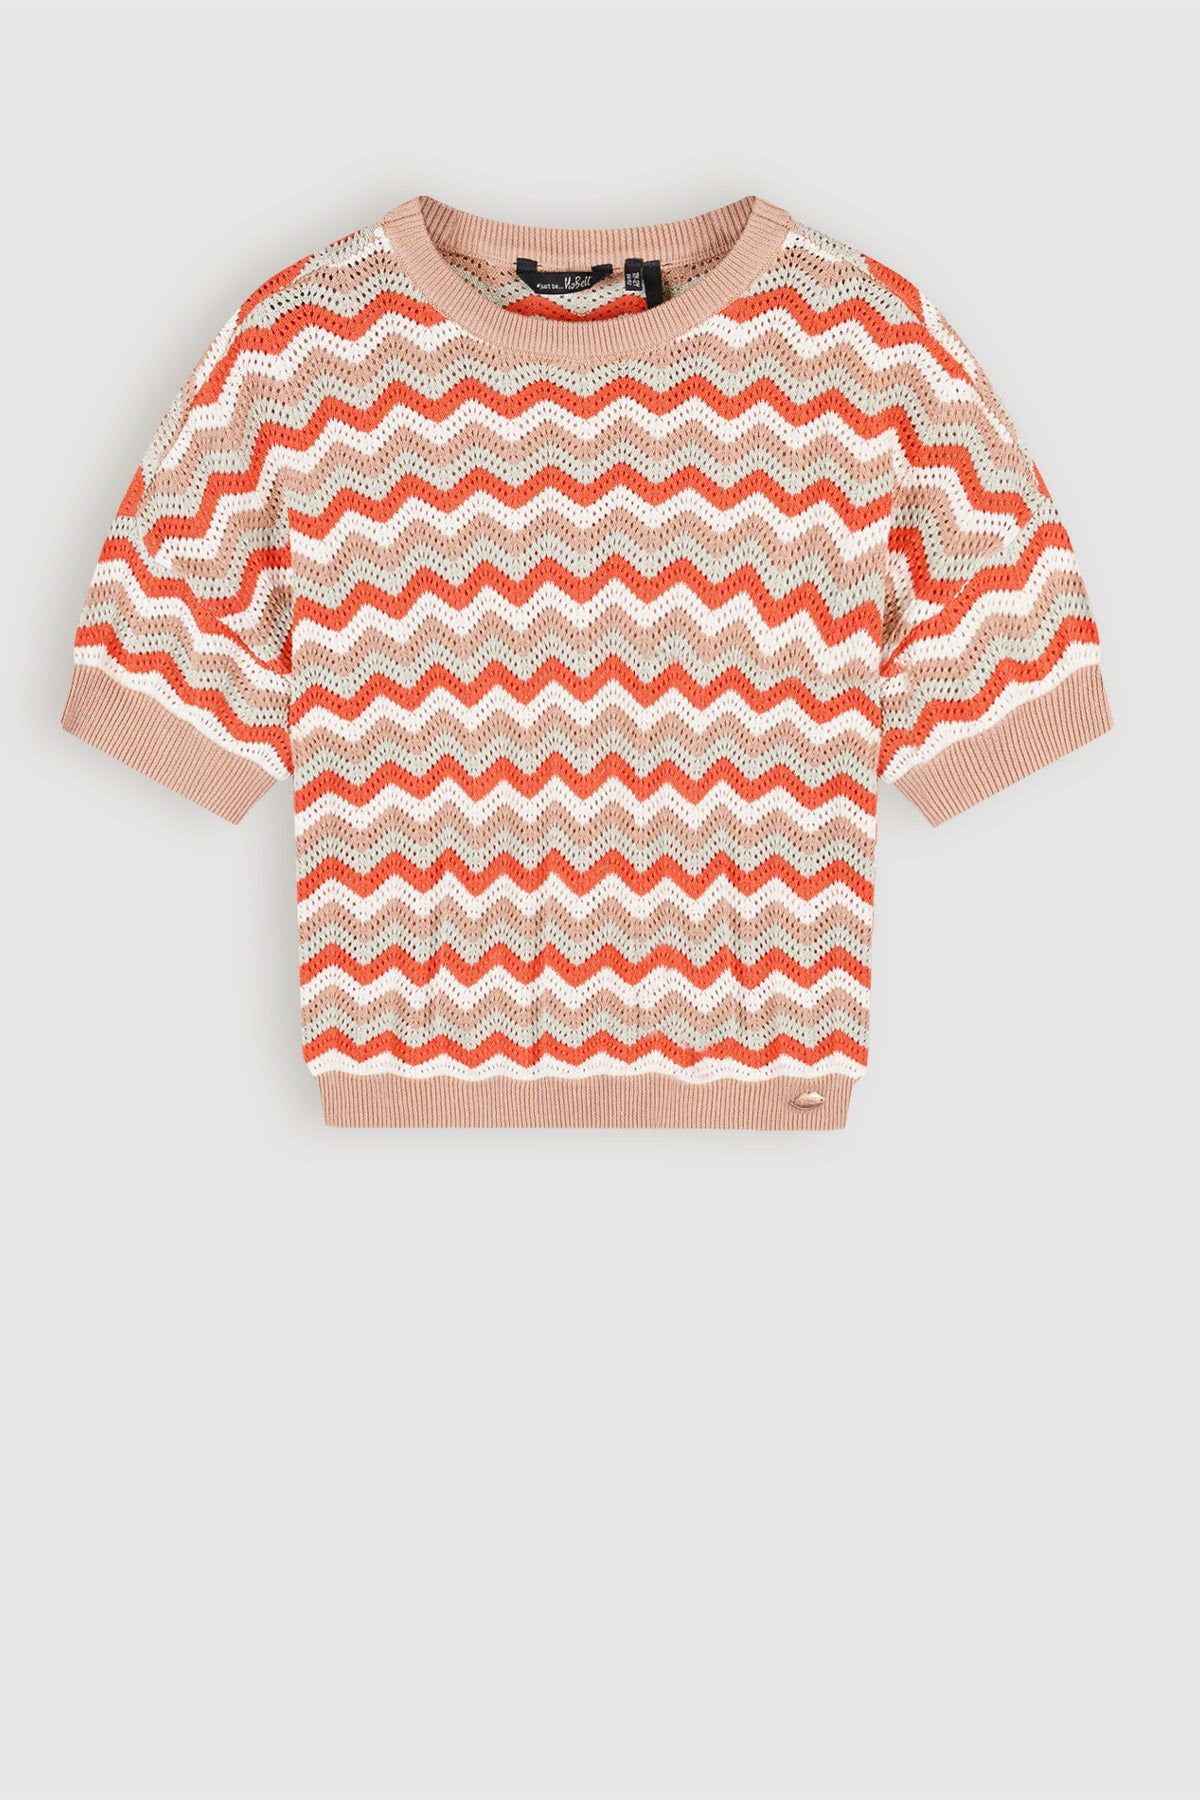 Trui / Sweater Alic Zigzag Gebreide Crop Trui Multikleuren Sand Blush